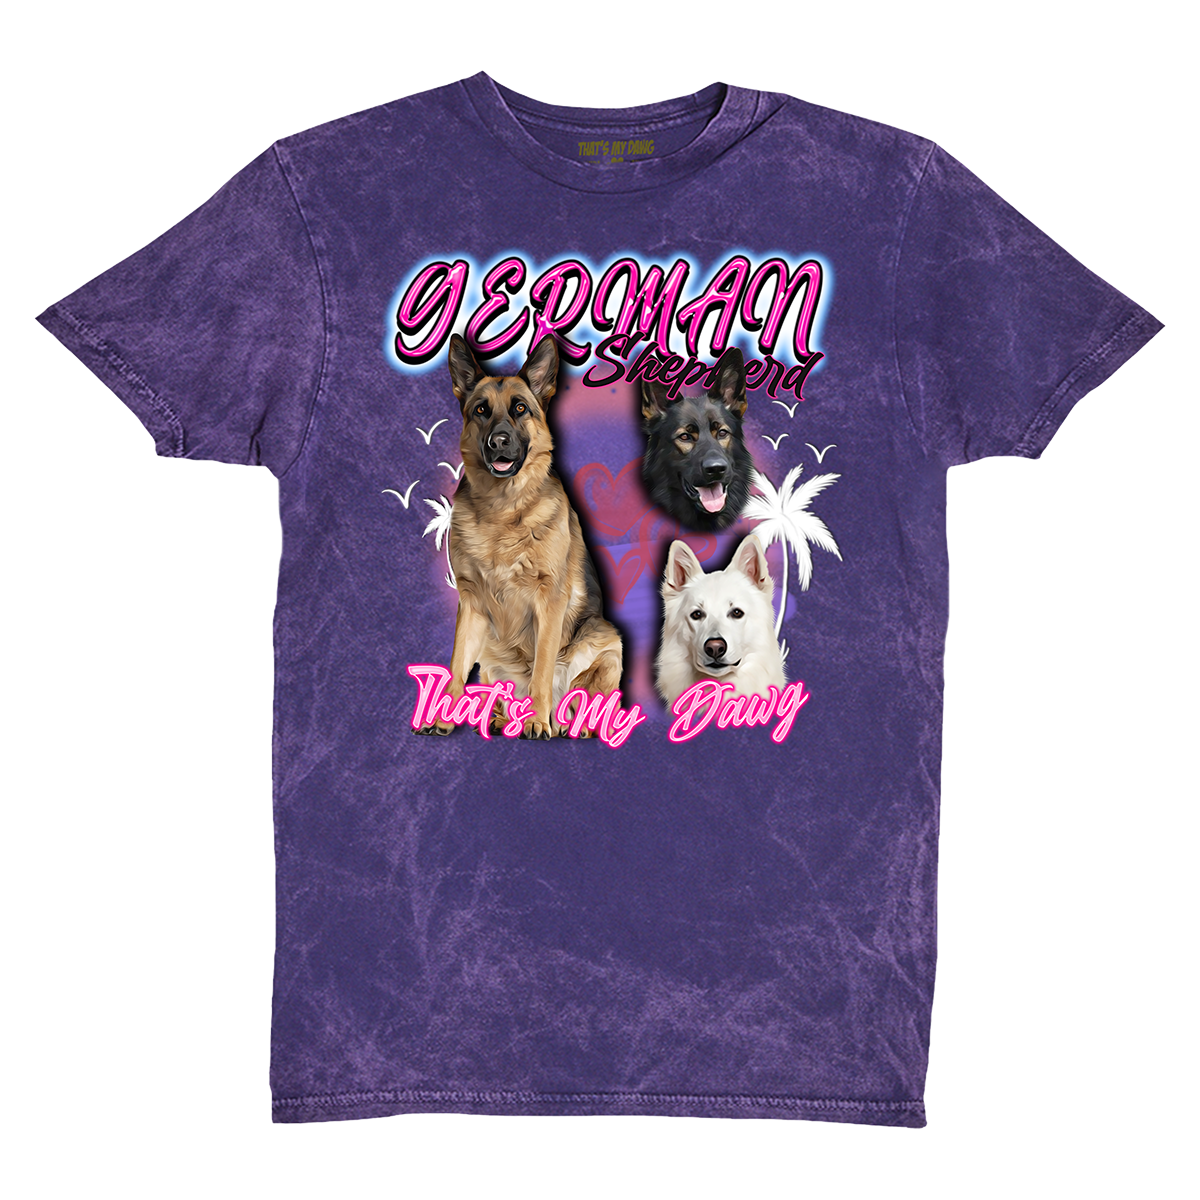 90's Style German Shepherd Vintage T-Shirts (Cloud Purple)